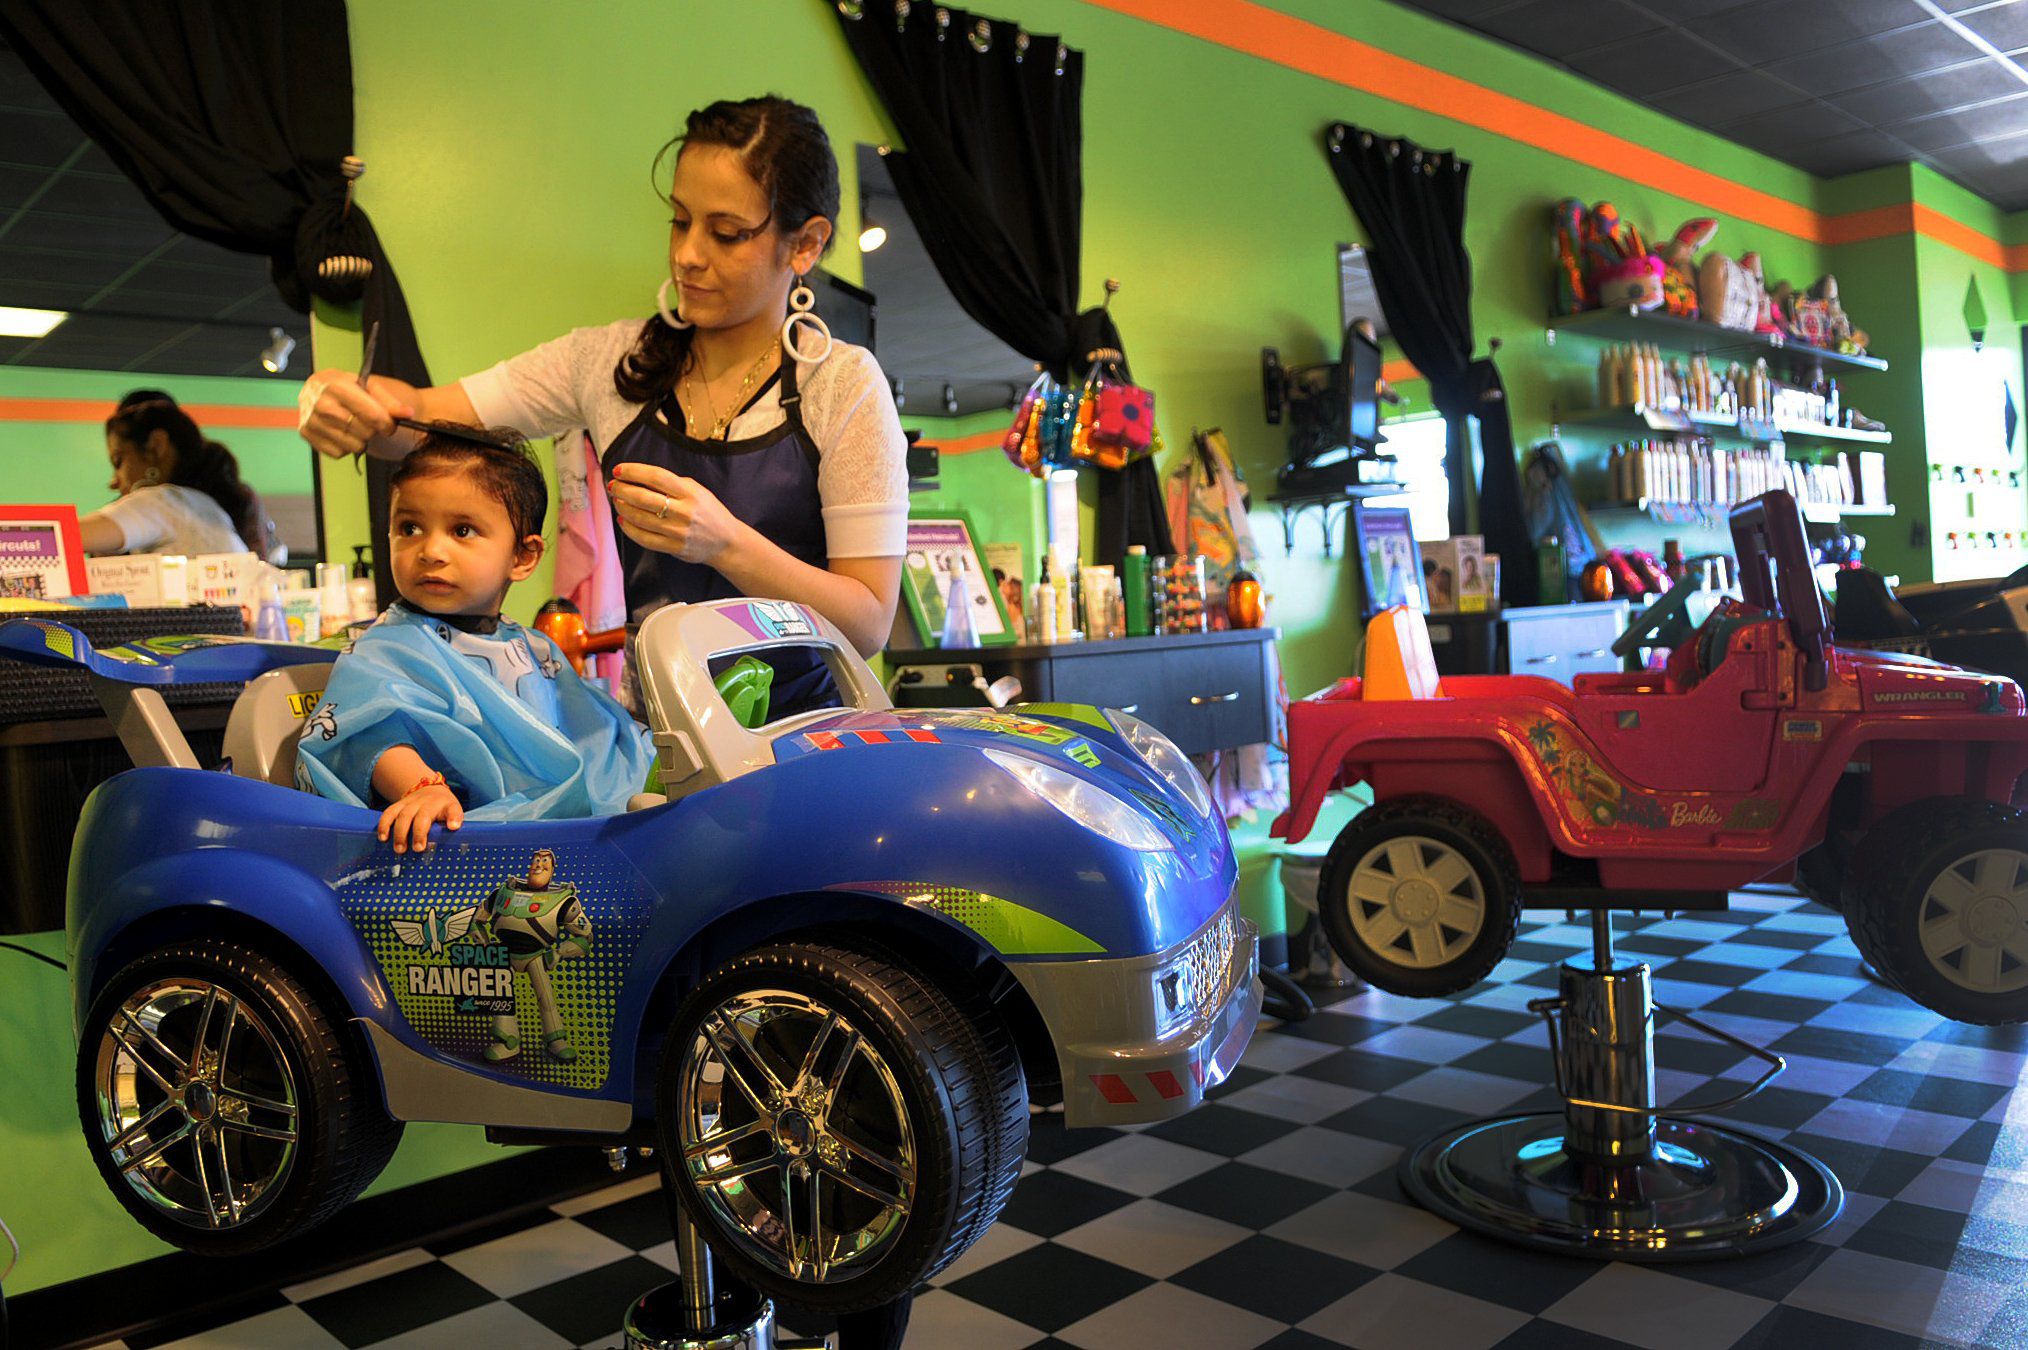 DeWitt hair salon for kids closes, blames coronavirus restrictions -  